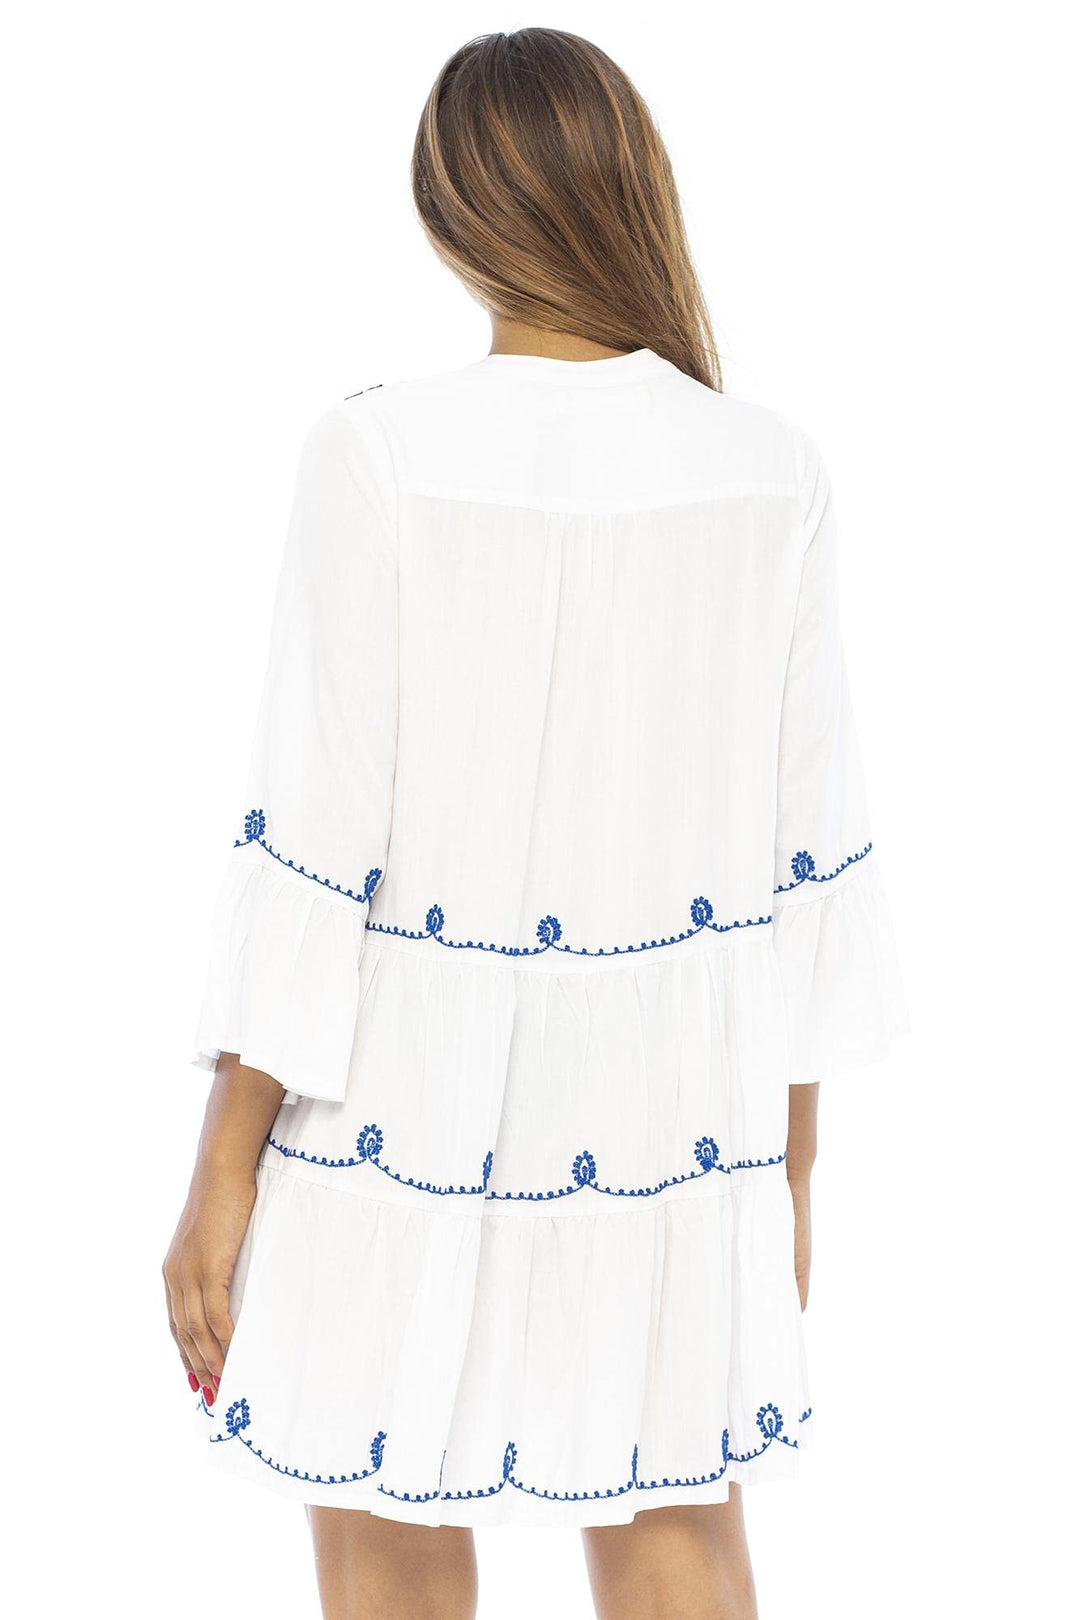 Short Flowy Boho Print Dress with Embroidered V Neck